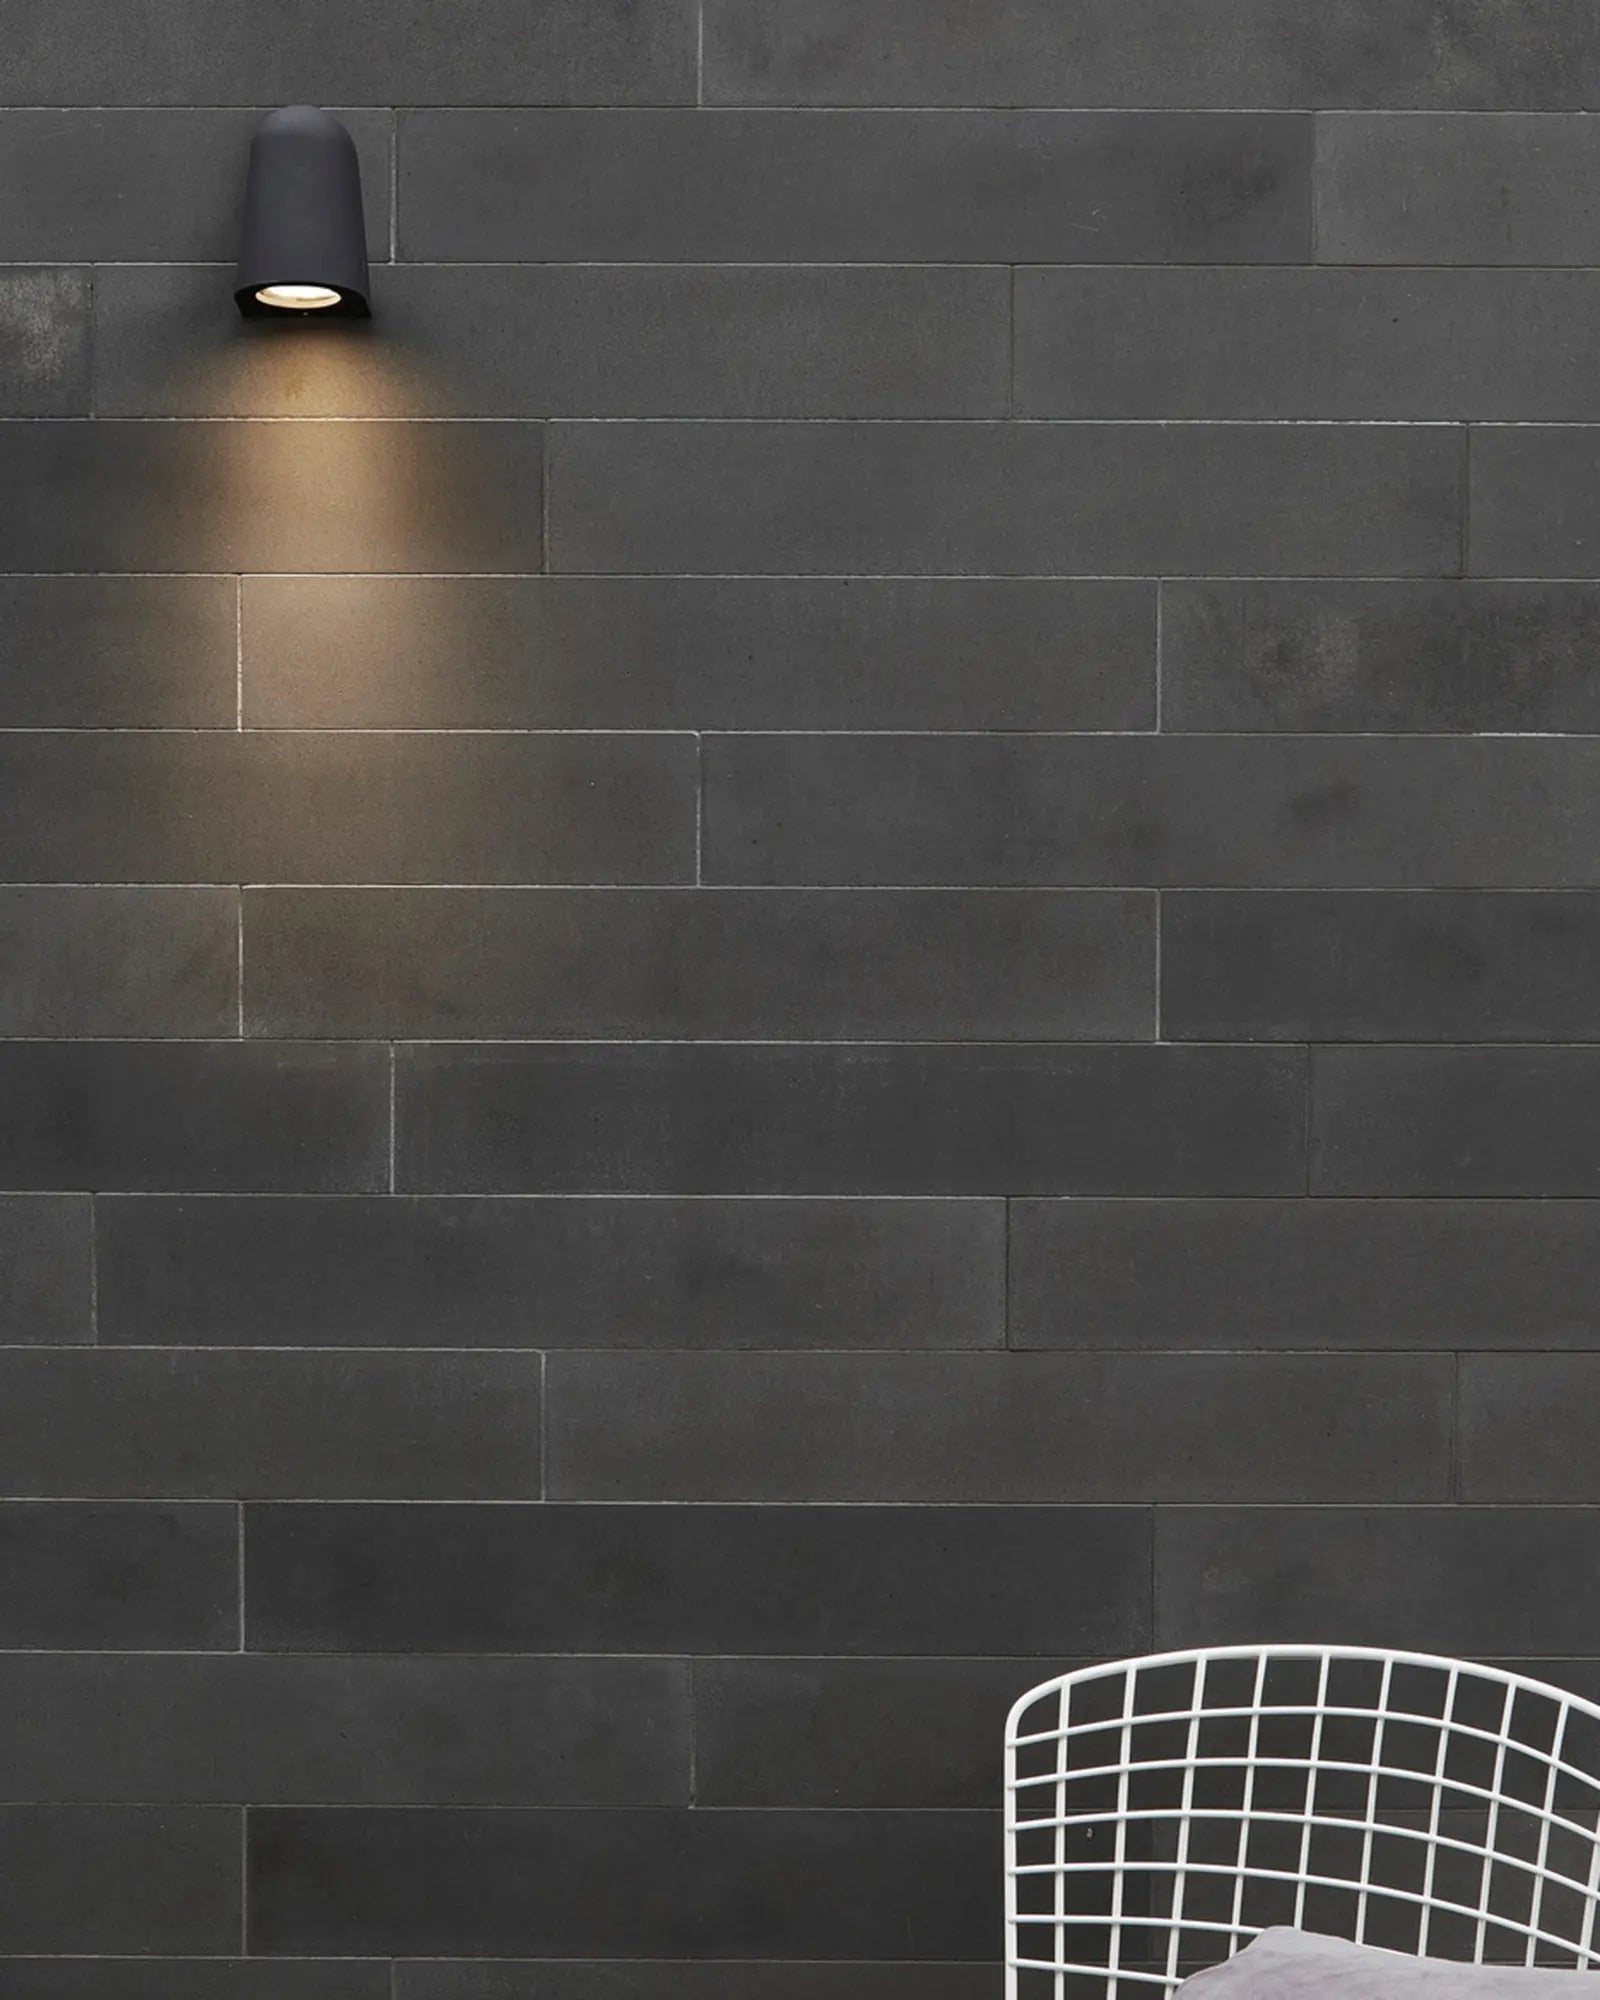 Mast minimal outdoor wall light on exterior black tiles